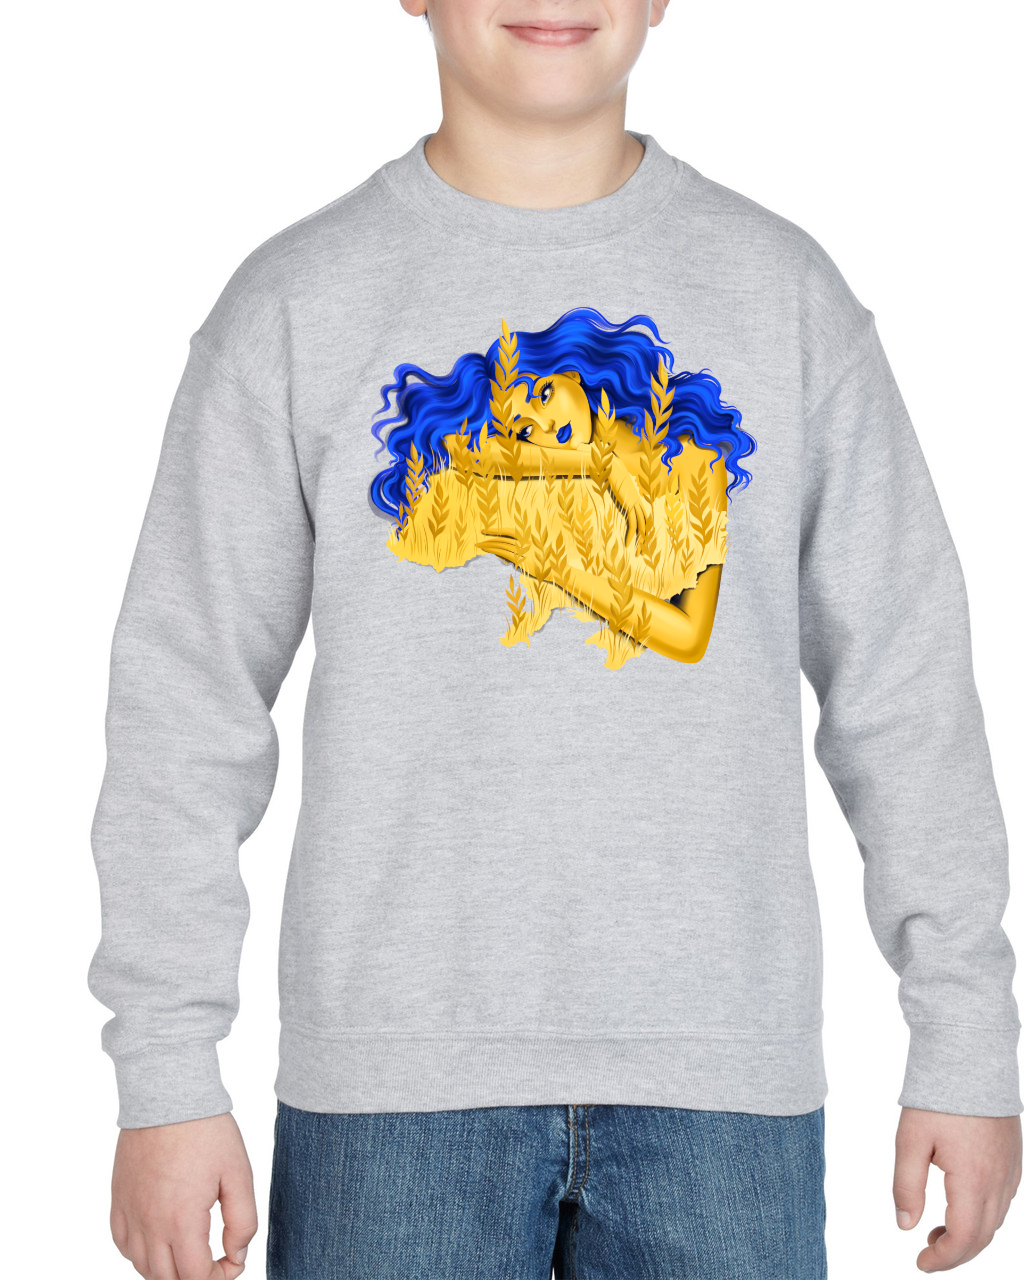 Kids' sweatshirt "Berehynia"